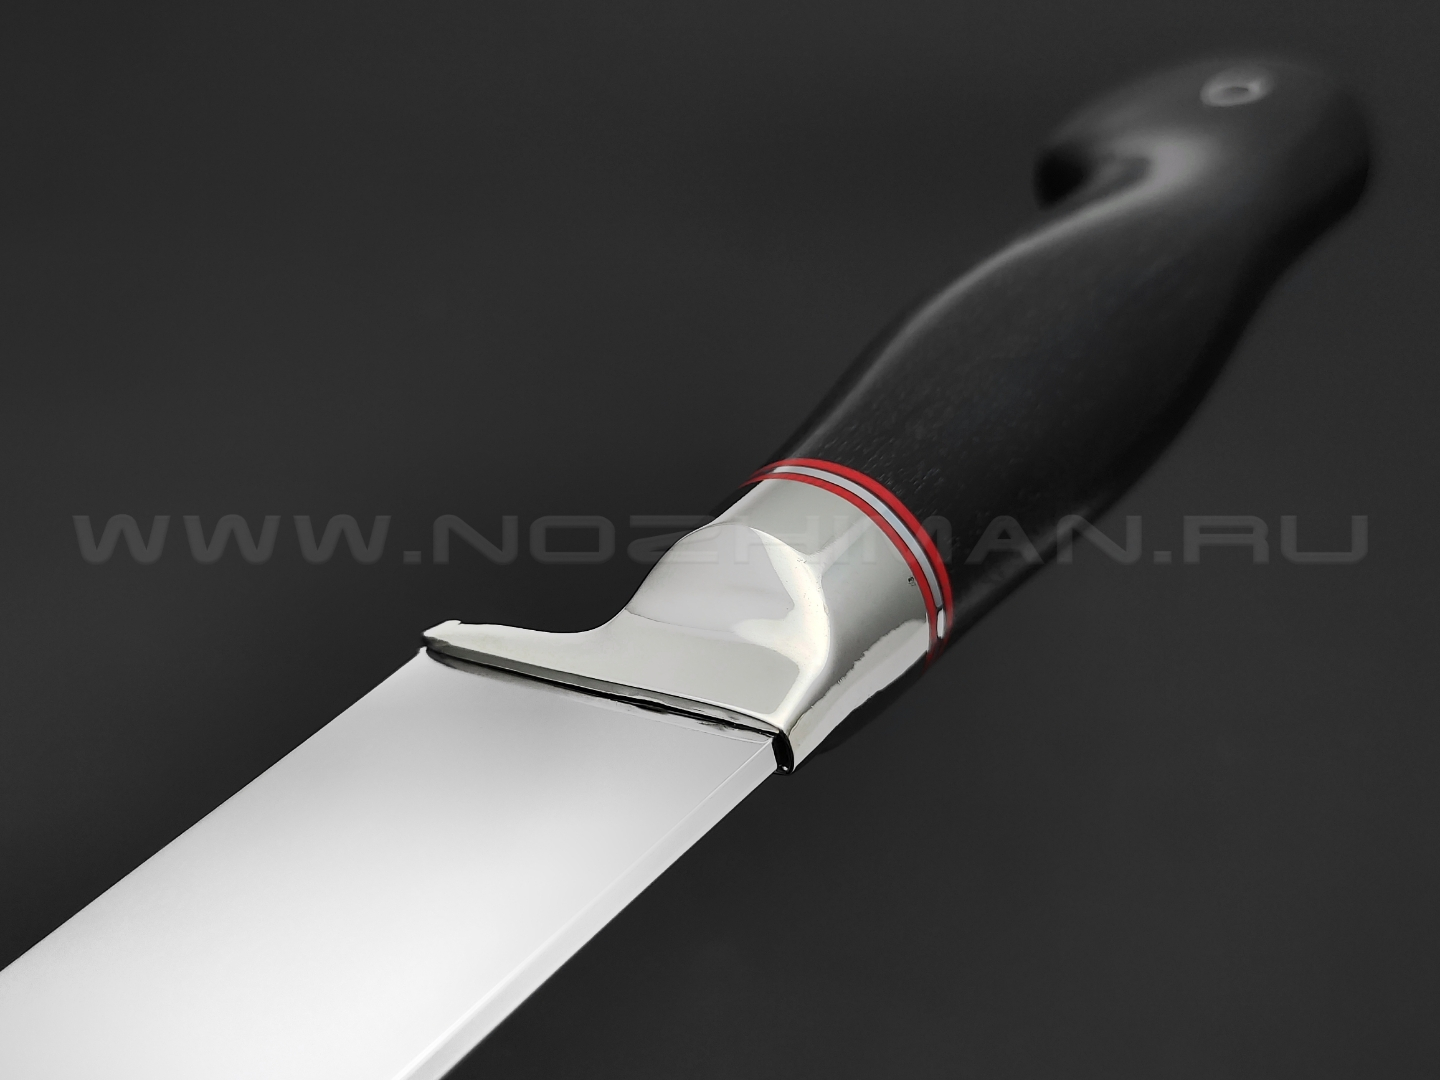 Нож "Пчак-Б1" сталь N690, рукоять чёрный граб (Тов. Завьялова)